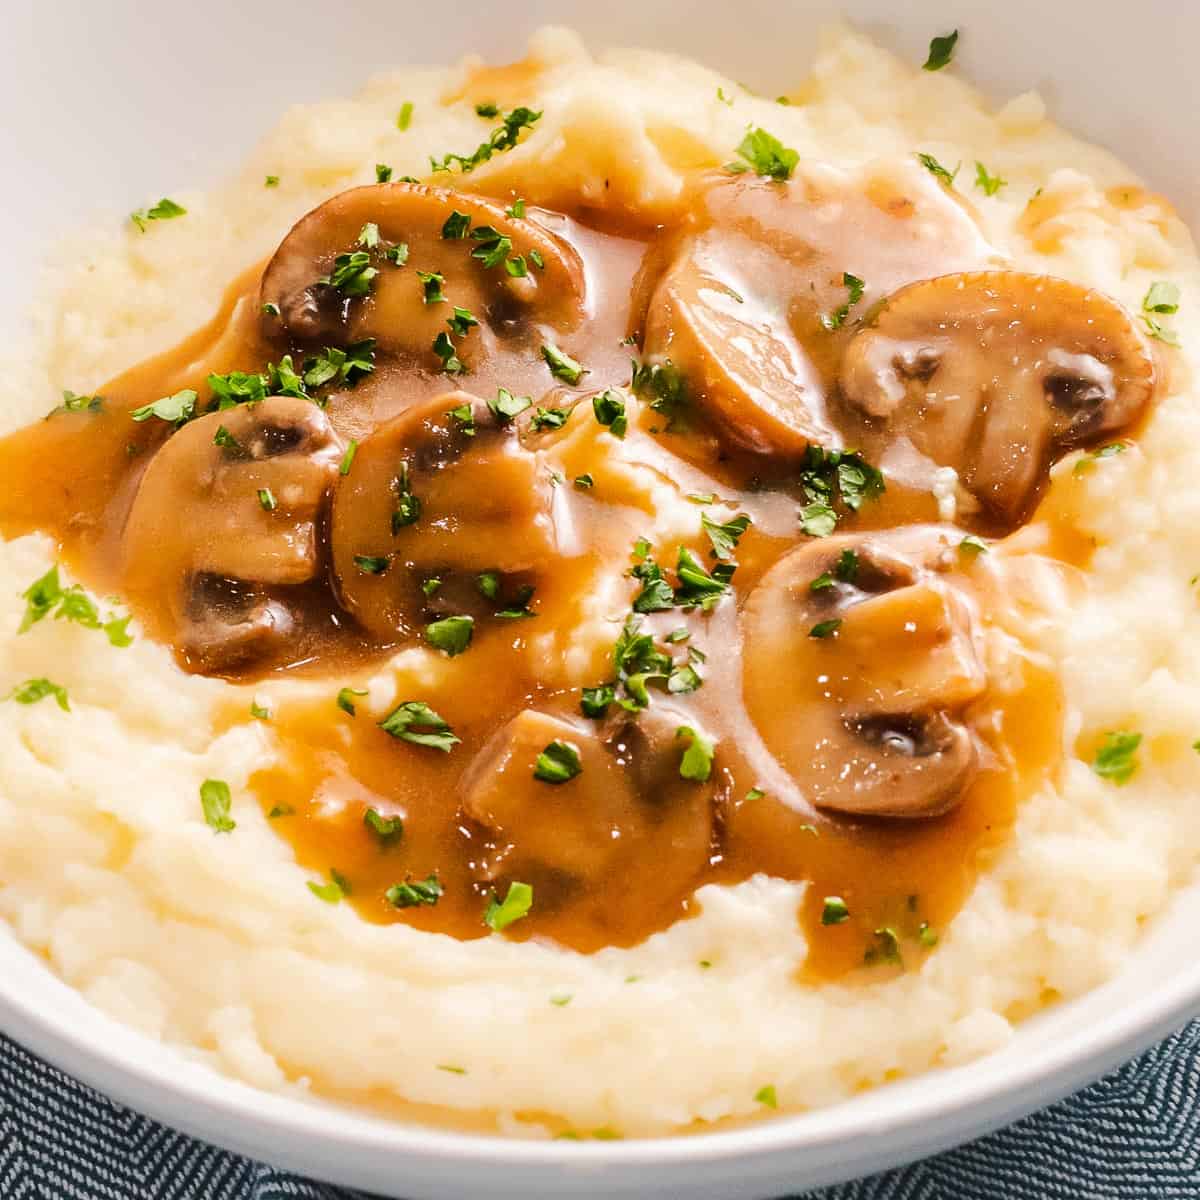 Vegan gravy with mushrooms over mashed potatoes.